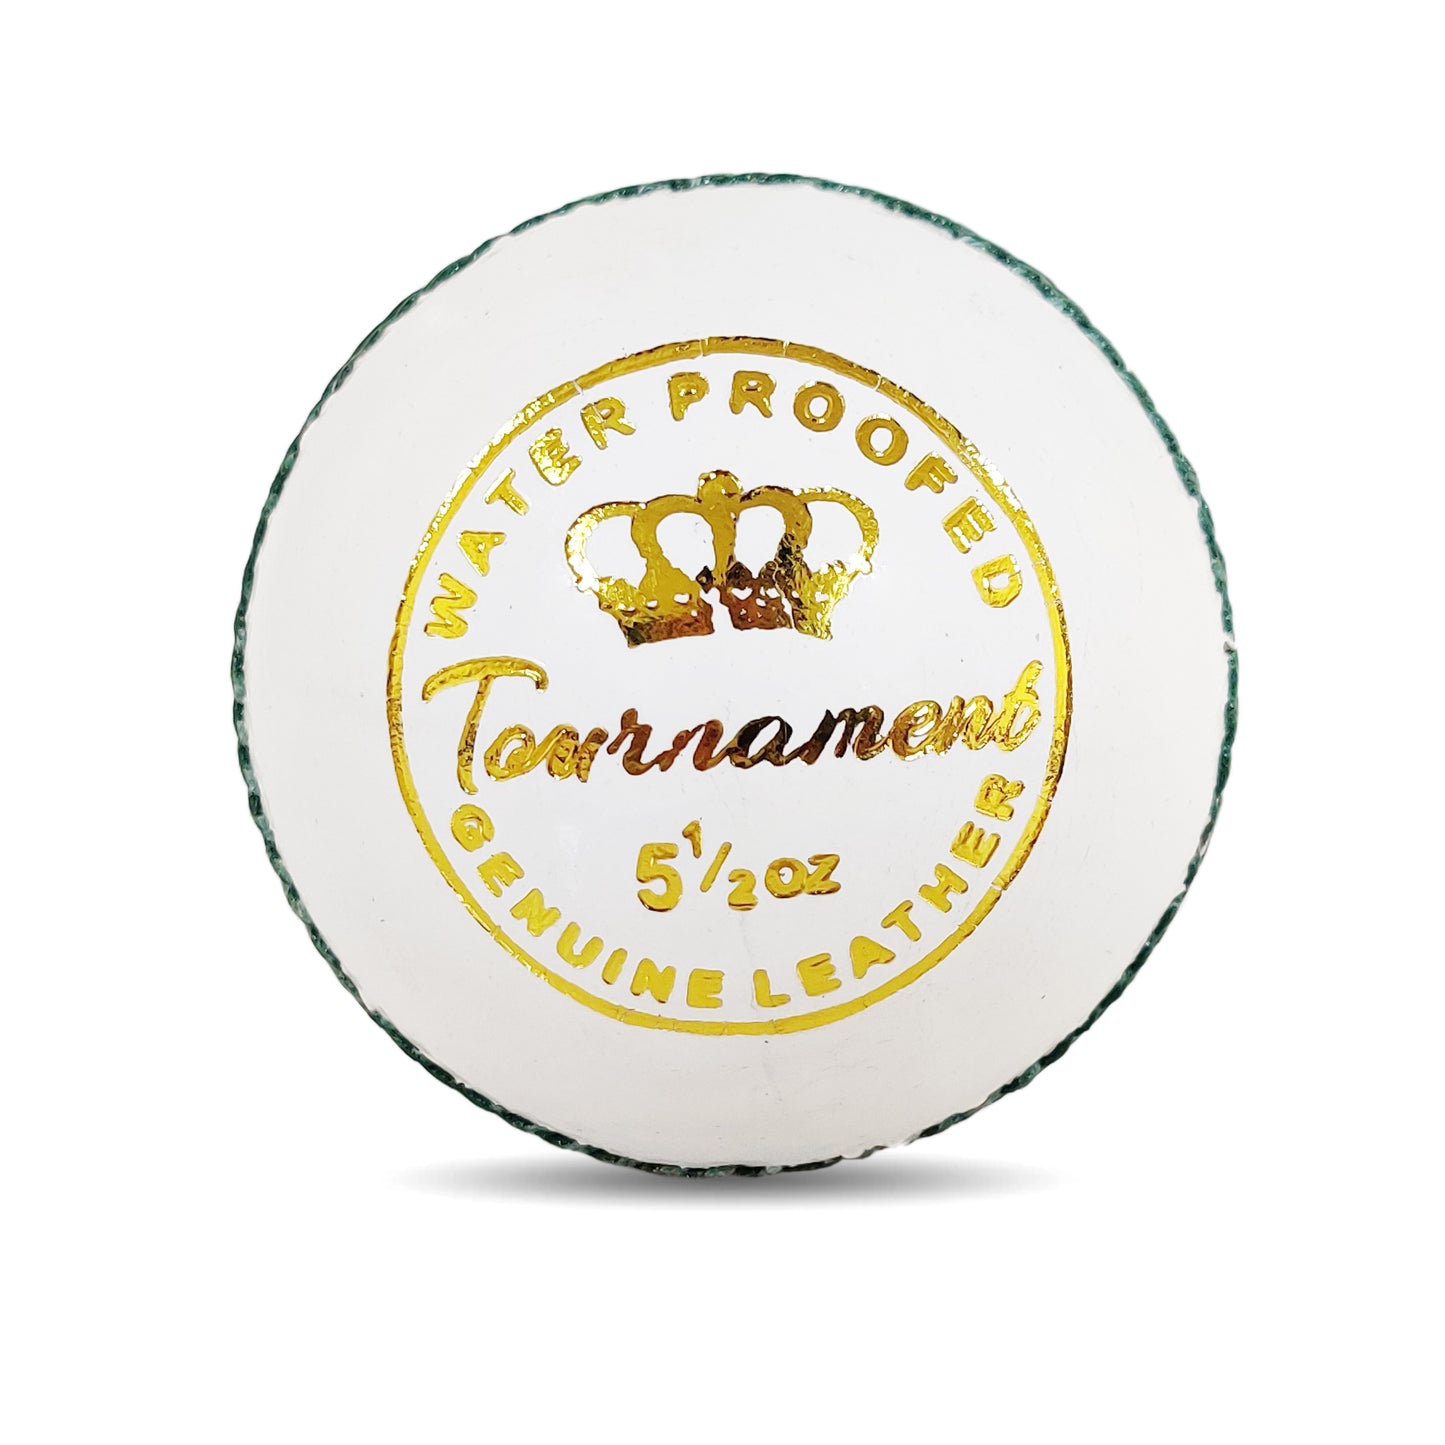 Prokick Tournament Four Piece Leather Cricket Ball, 1Pc (White) - Best Price online Prokicksports.com